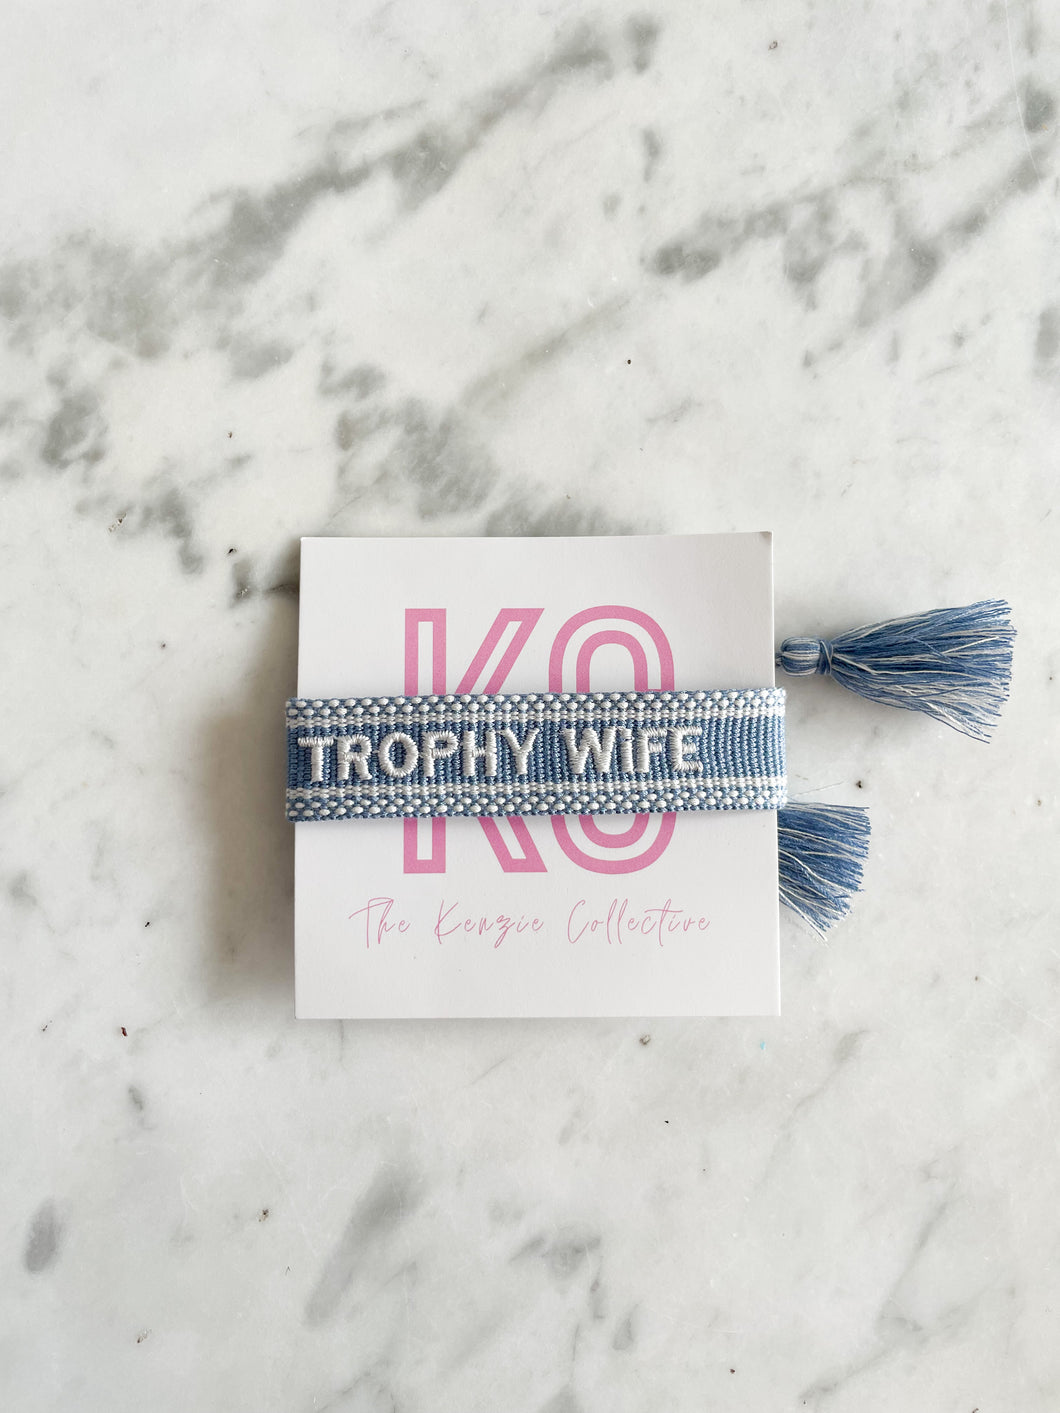 Trophy Wife Bracelet - Denim Blue (exclusive)